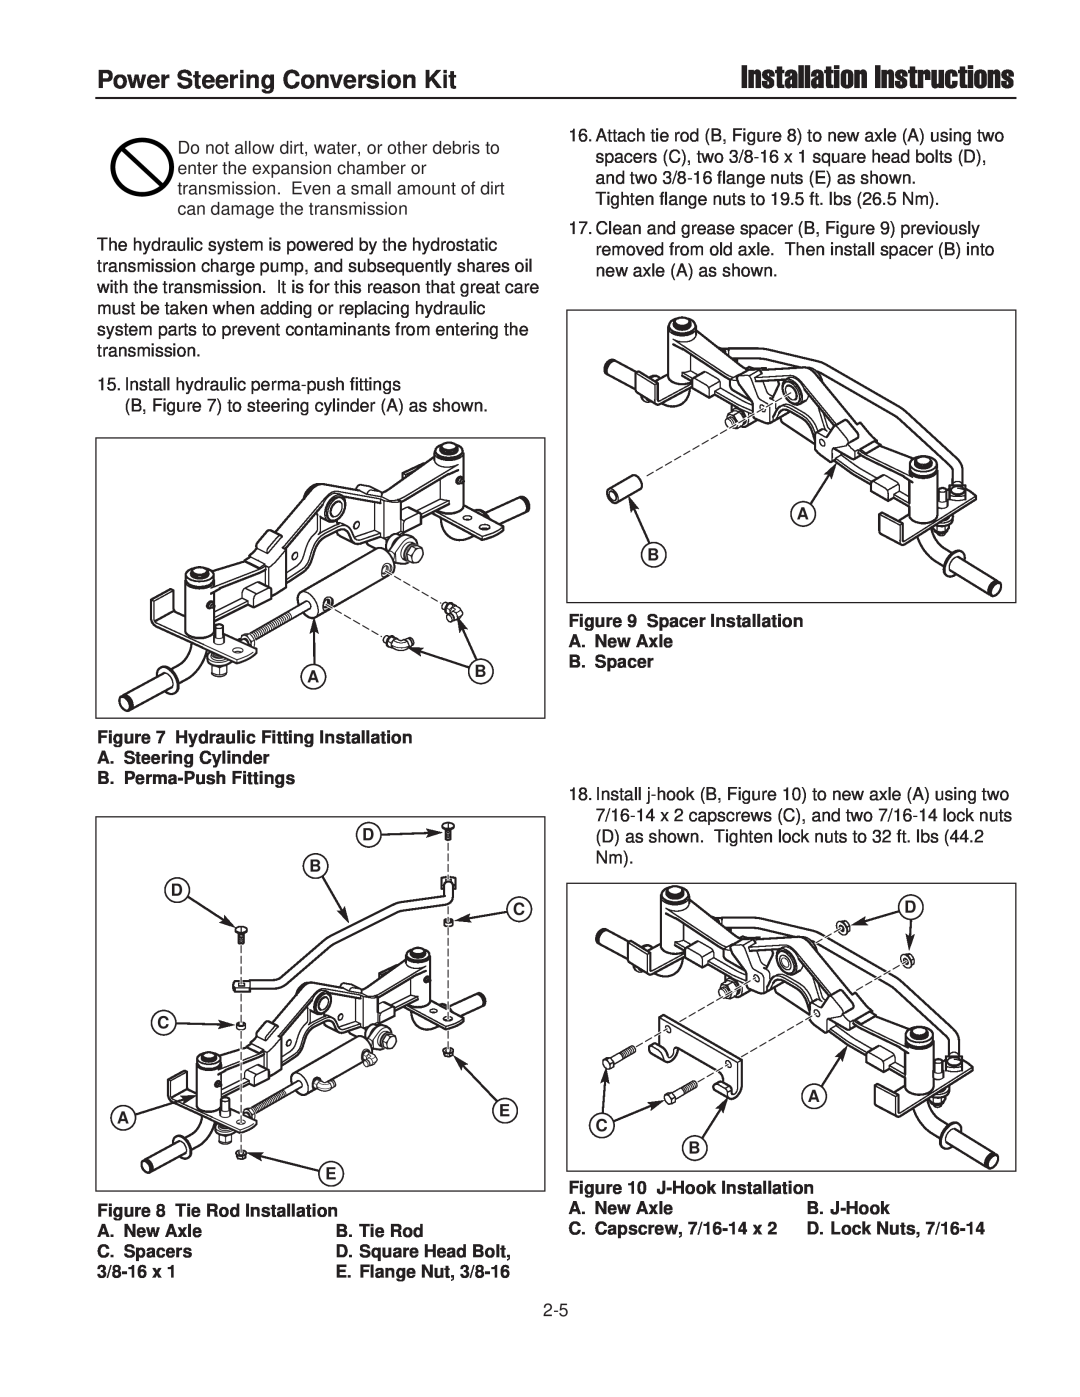 Briggs & Stratton 1687302 Installation Instructions, Power Steering Conversion Kit, Hydraulic Fitting Installation 